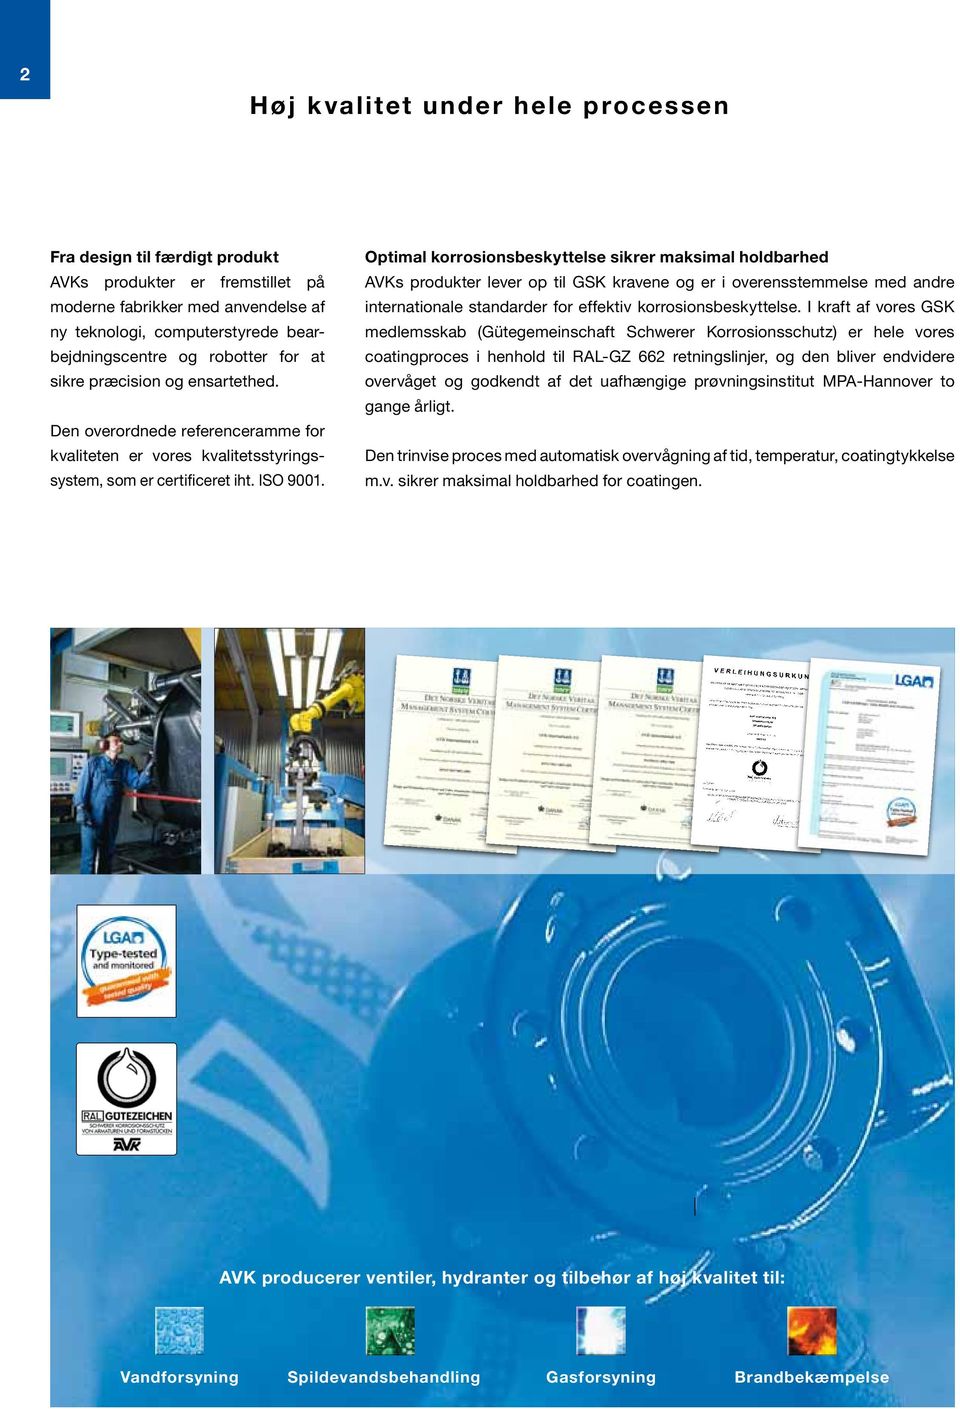 Optimal korrosionsbeskyttelse sikrer maksimal holdbarhed AVKs produkter lever op til GSK kravene og er i overensstemmelse med andre internationale standarder for effektiv korrosionsbeskyttelse.